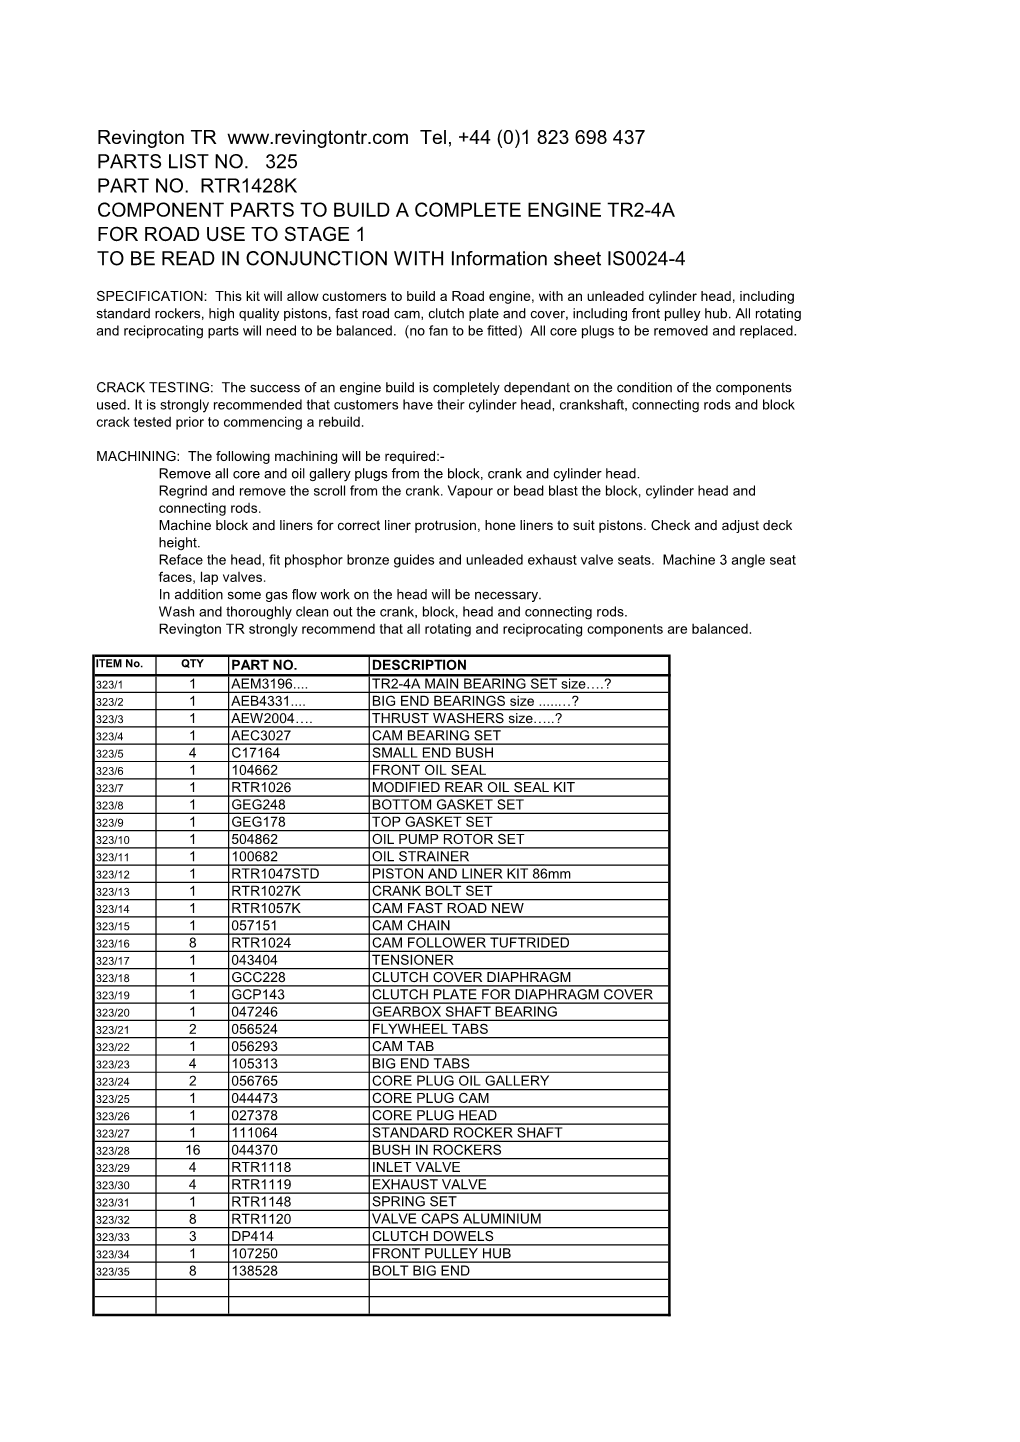 Parts List RTR1428K